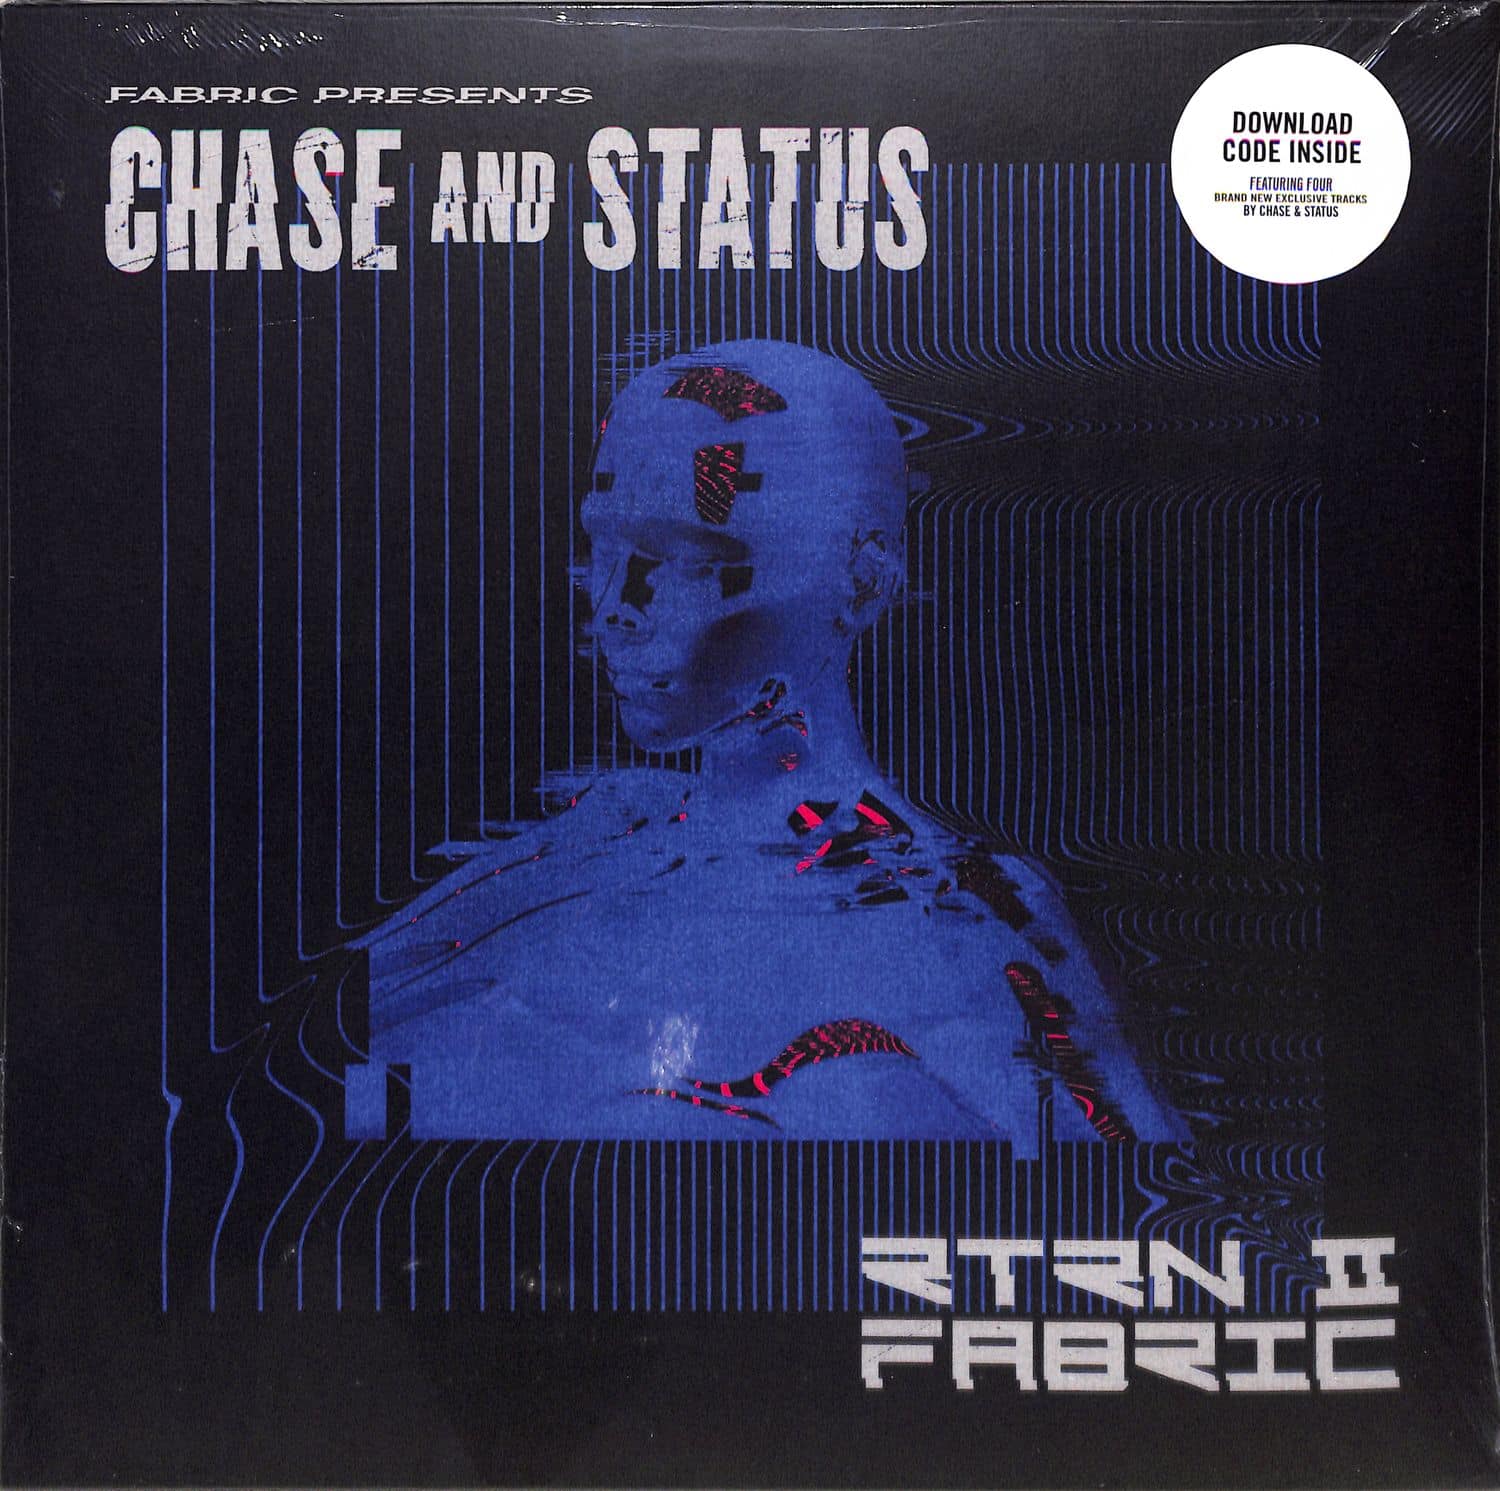 Chase & Status - FABRIC PRESENTS: CHASE & STATUS RTRN II FABRIC 